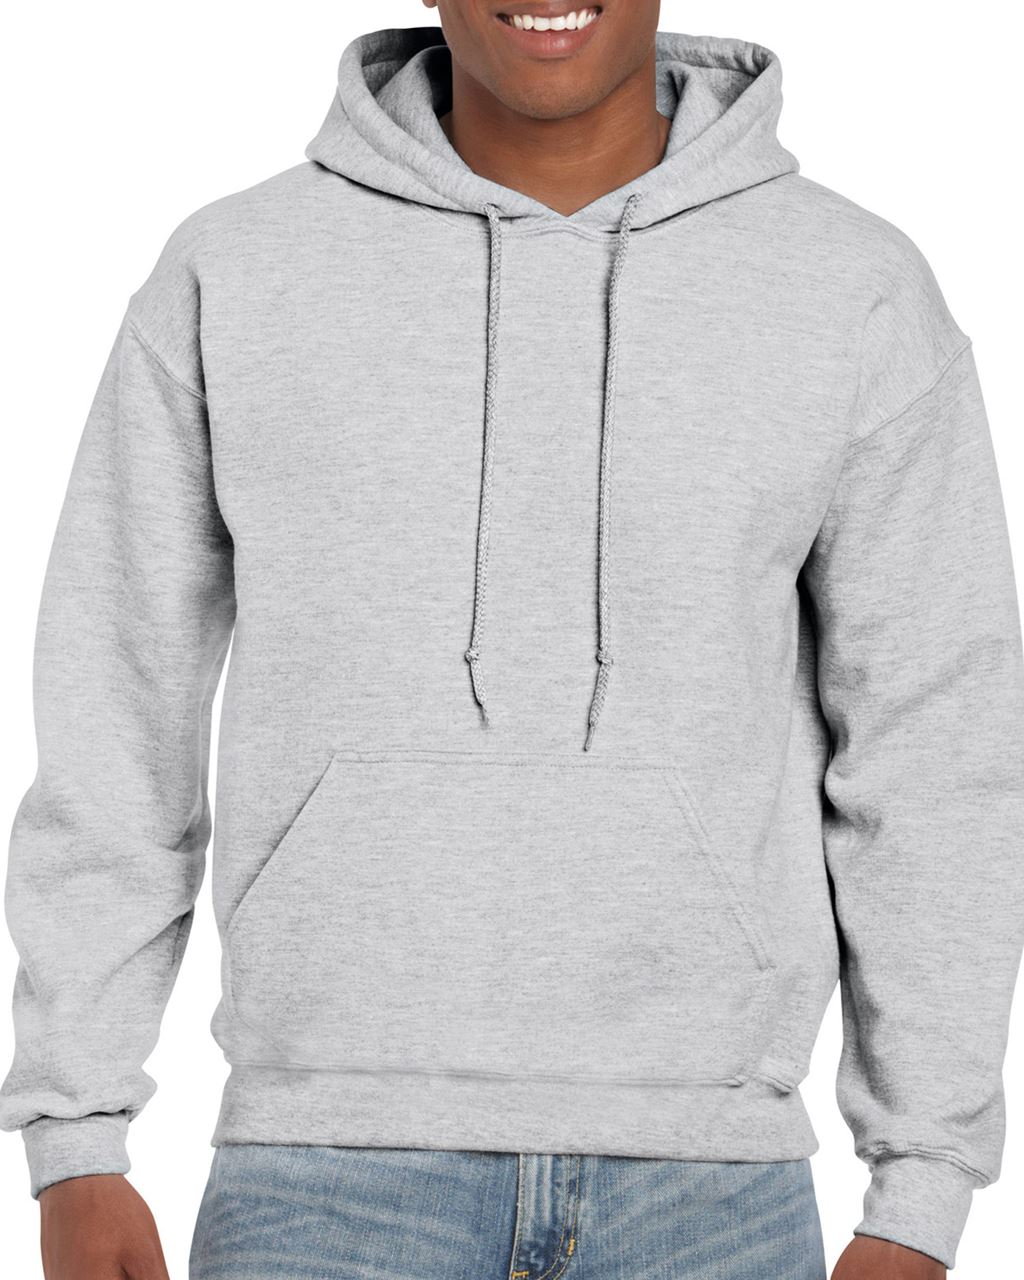 Gildan Dryblend® Adult Hooded Sweatshirt - Grau